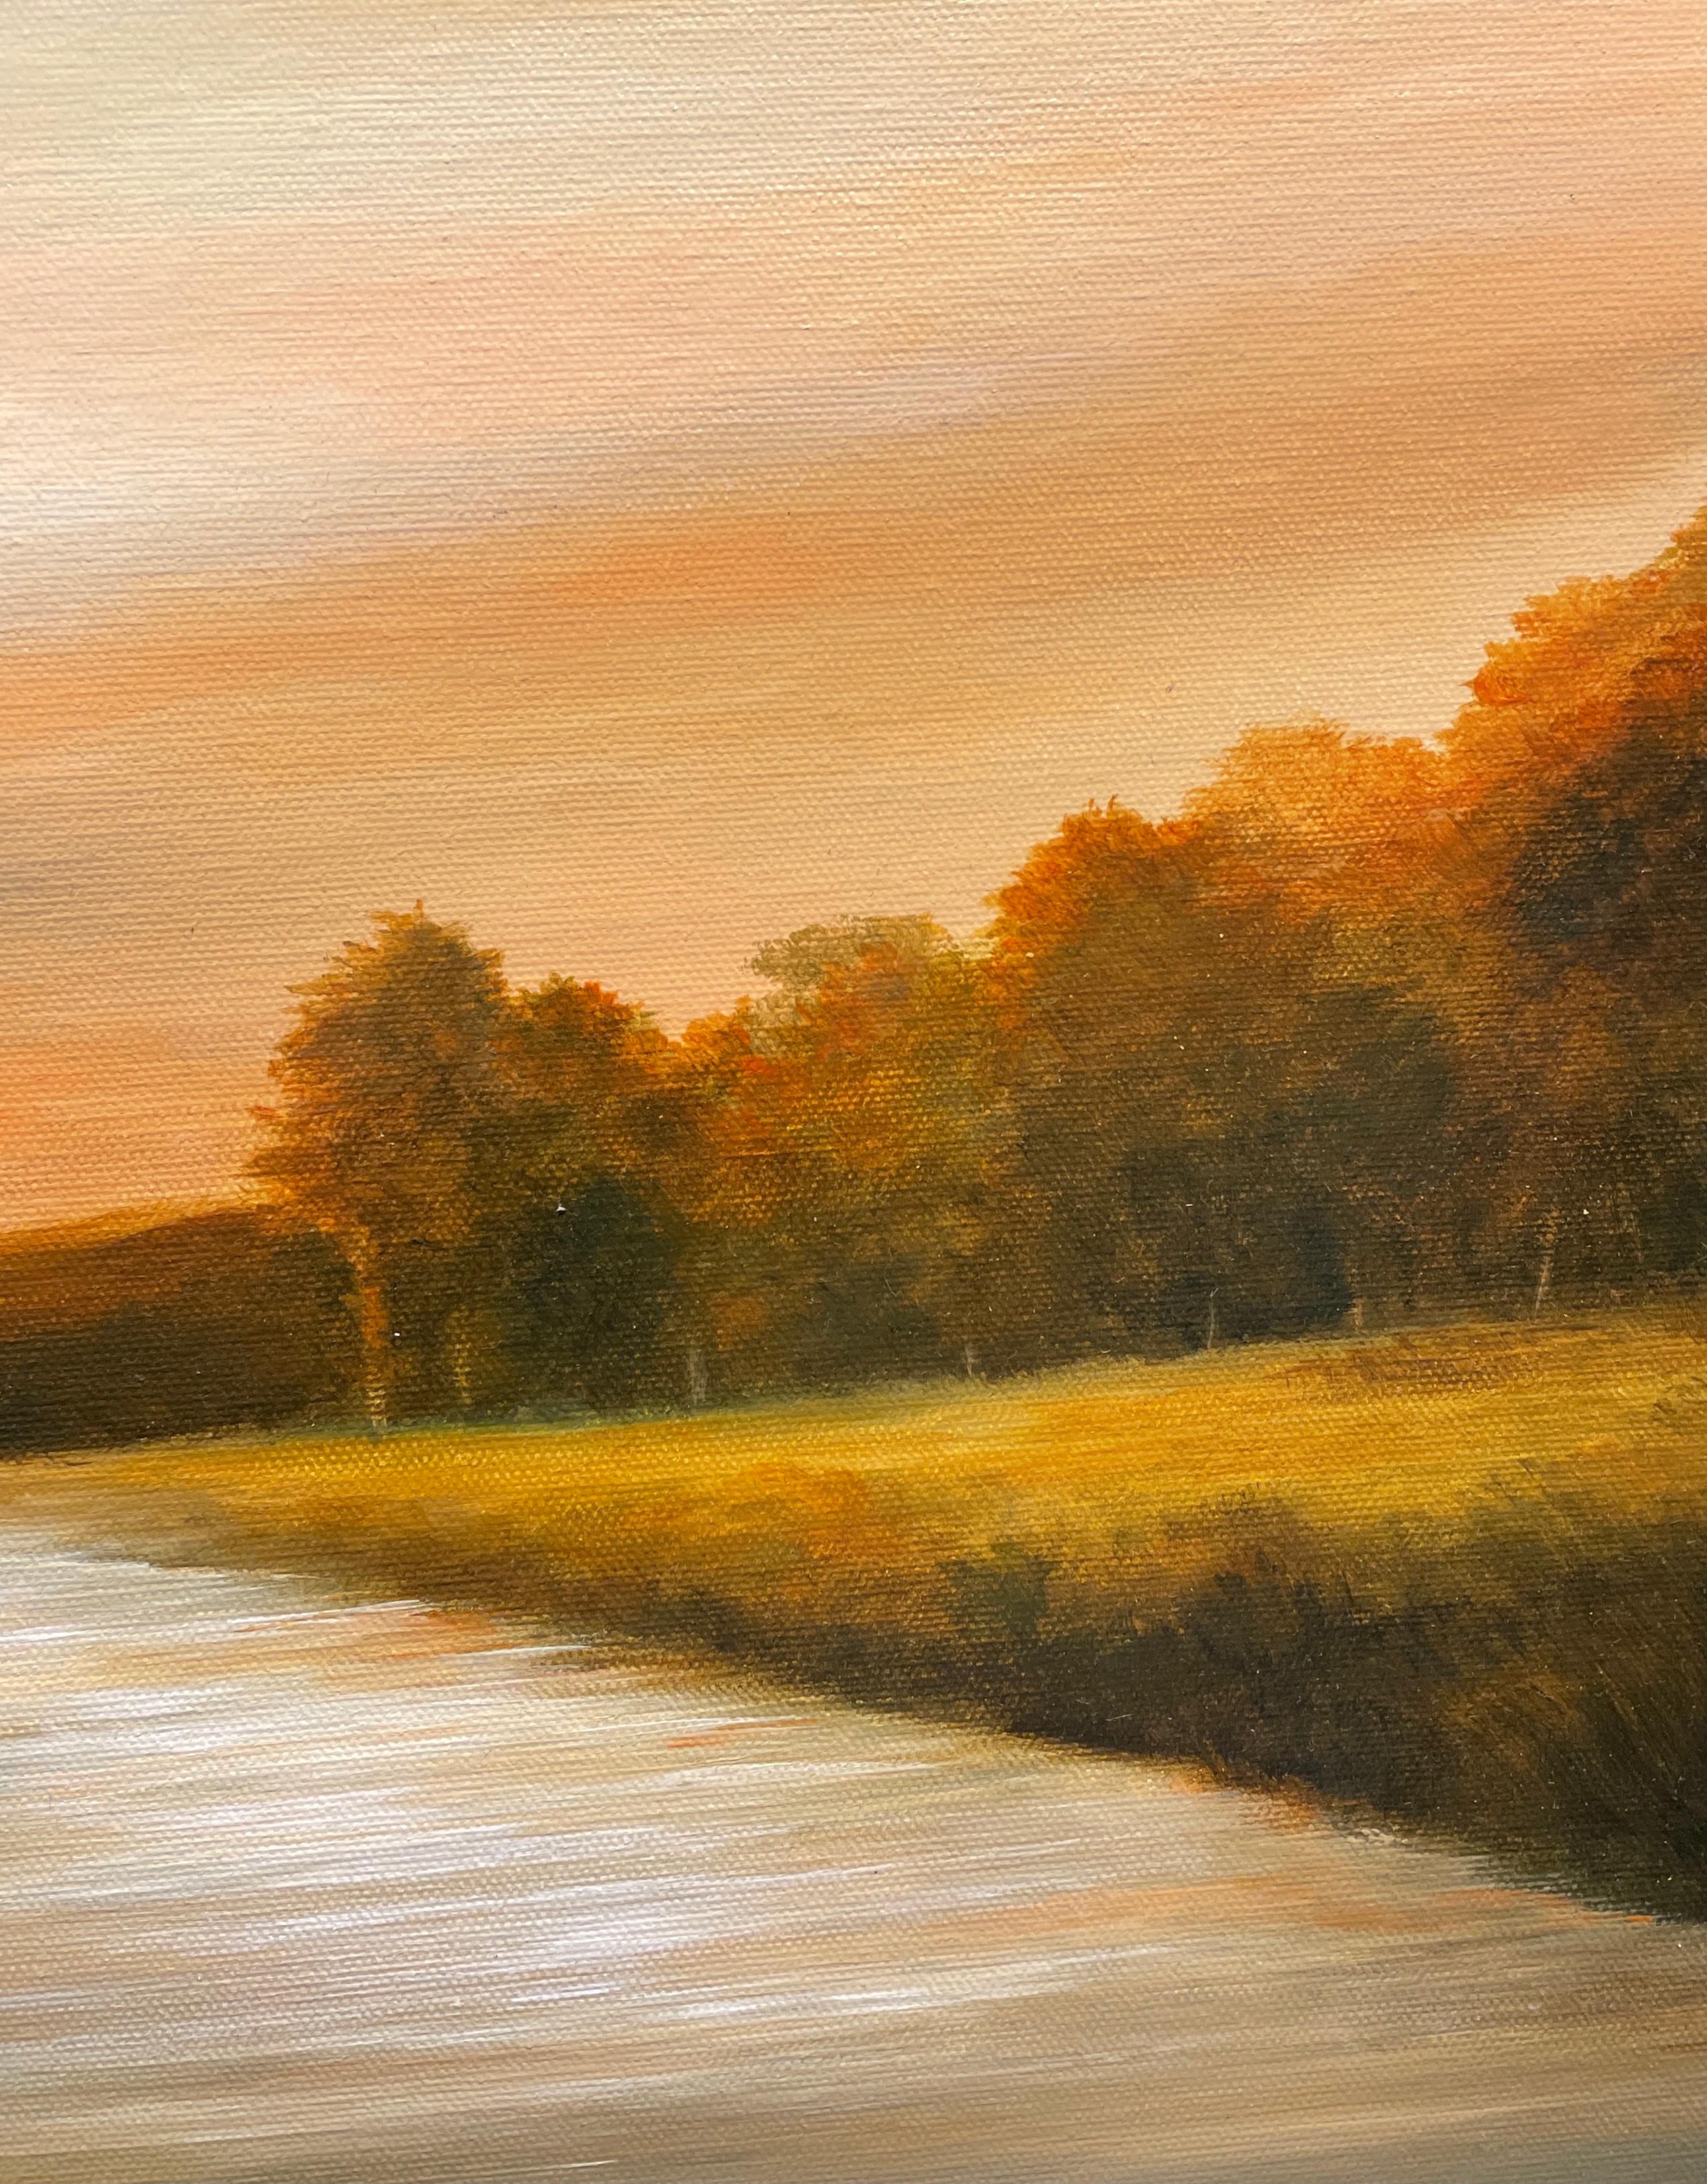 Creek Bend at Dusk - Original Oil Painting with a Golden Landscape, River Scene - Beige Landscape Painting by Ahzad Bogosian